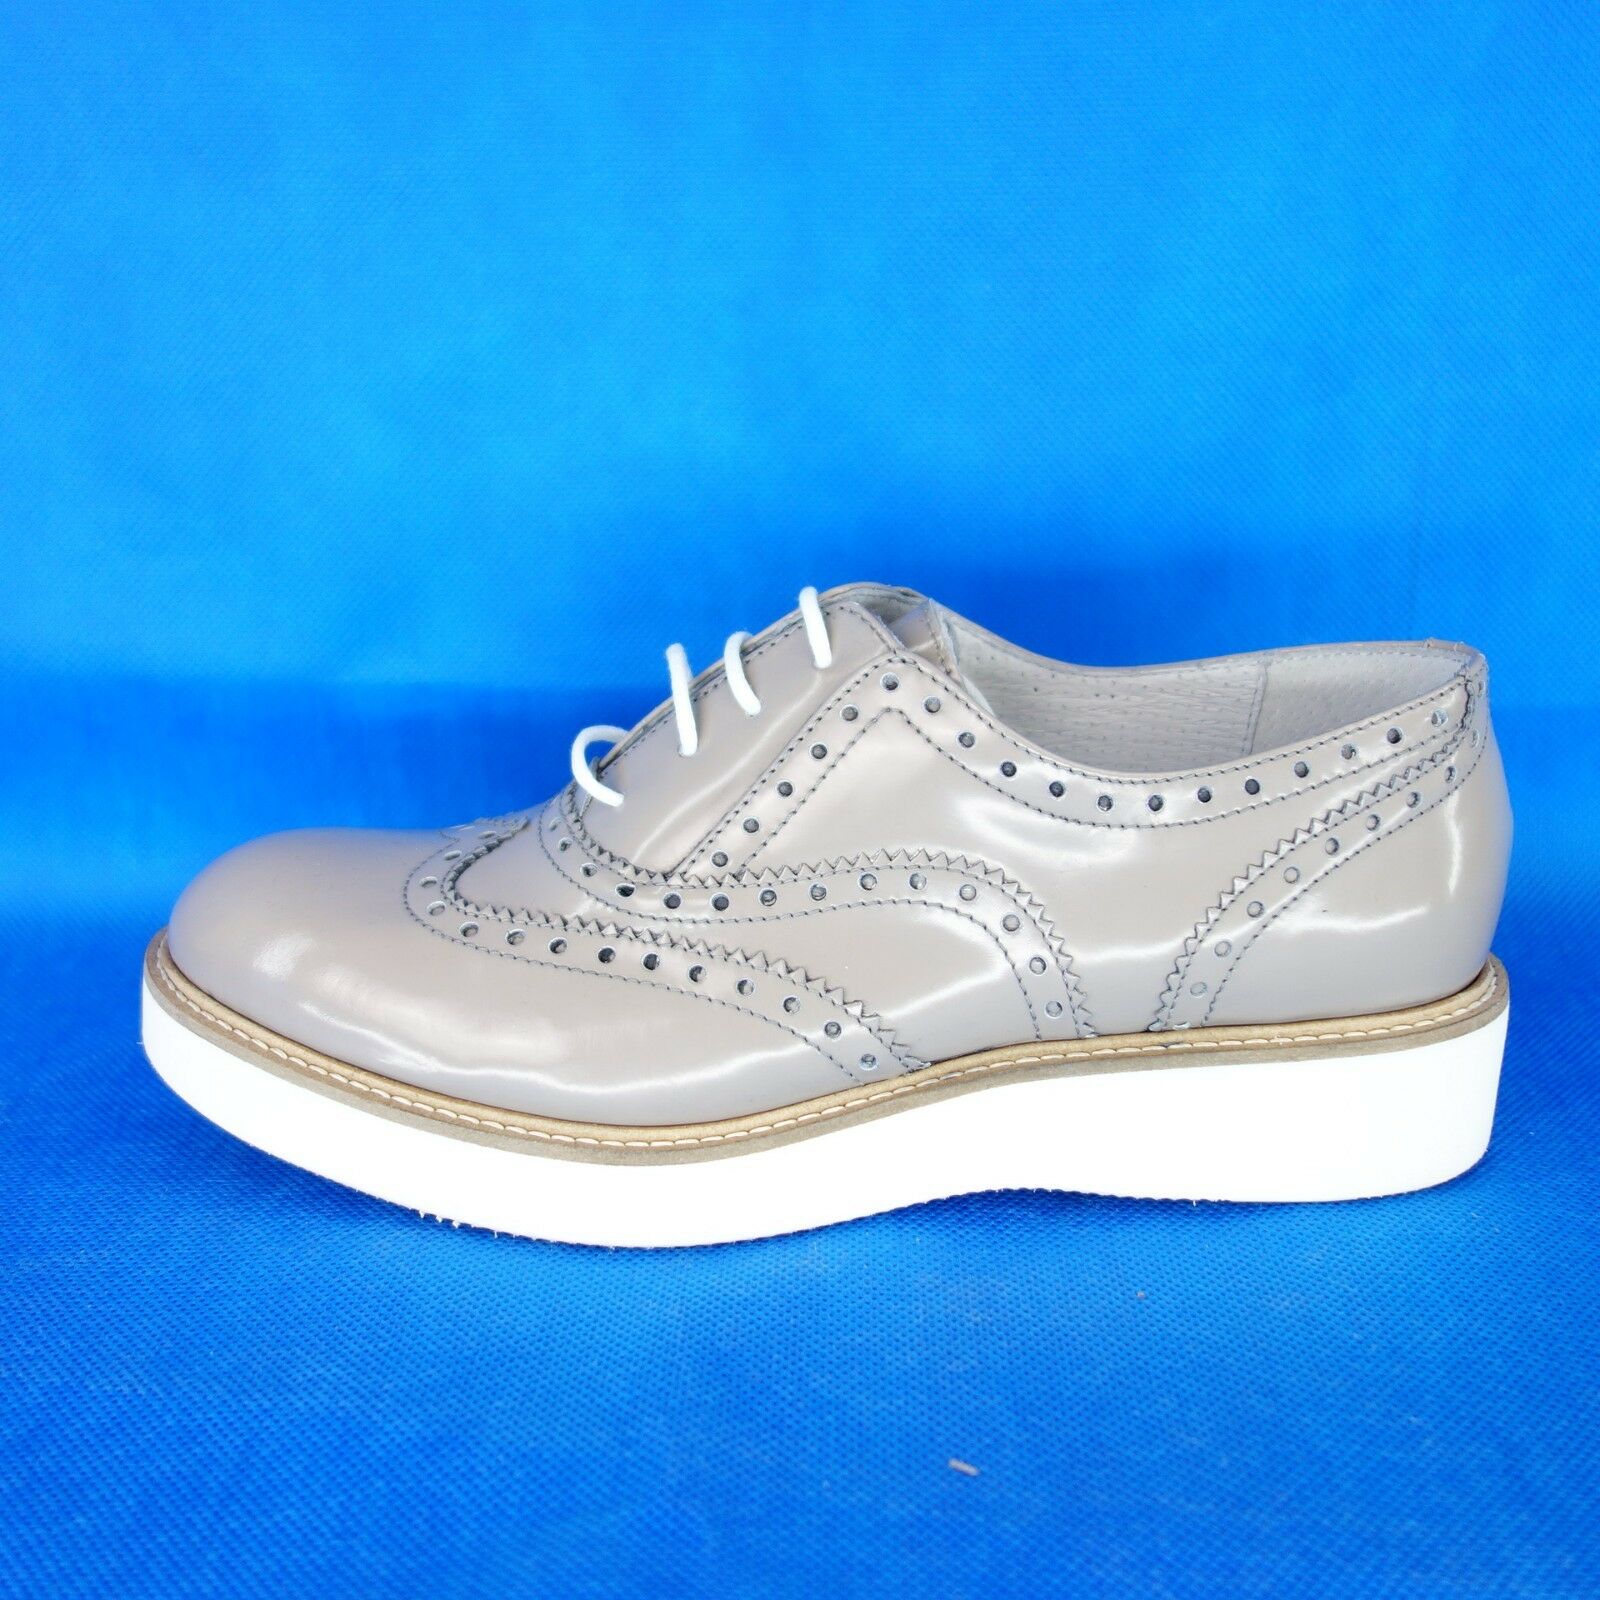 Billi Bi Damen Schuhe Loafer Halbschuhe Schnürschuhe Grau Leder 37 Np 149 Neu - EUR 37